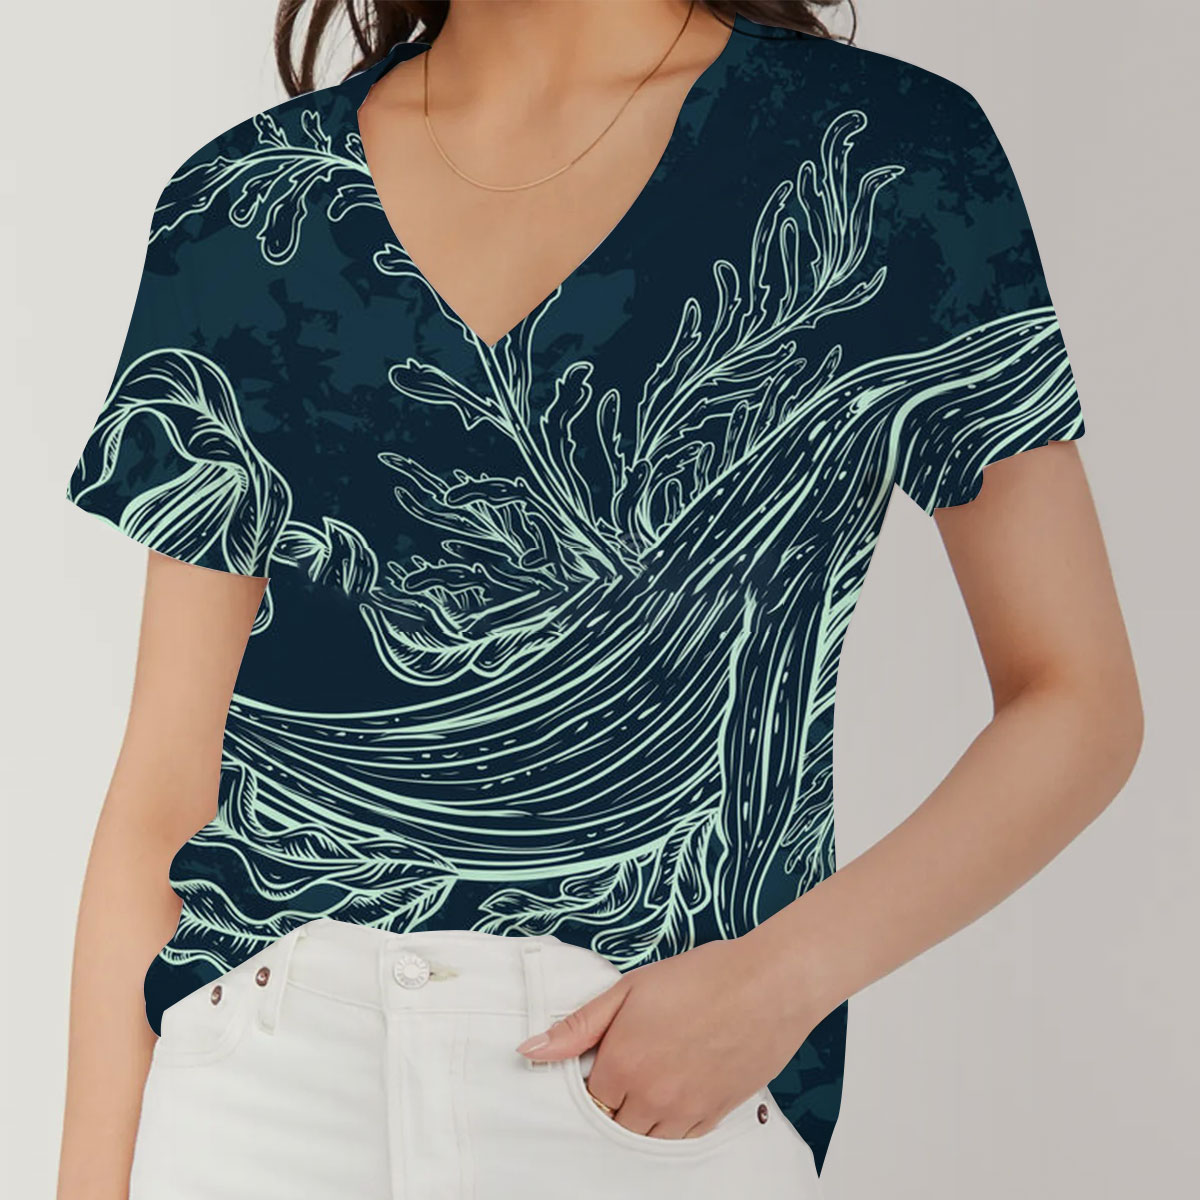 Seaweed Blue Whale V-Neck Women's T-Shirt